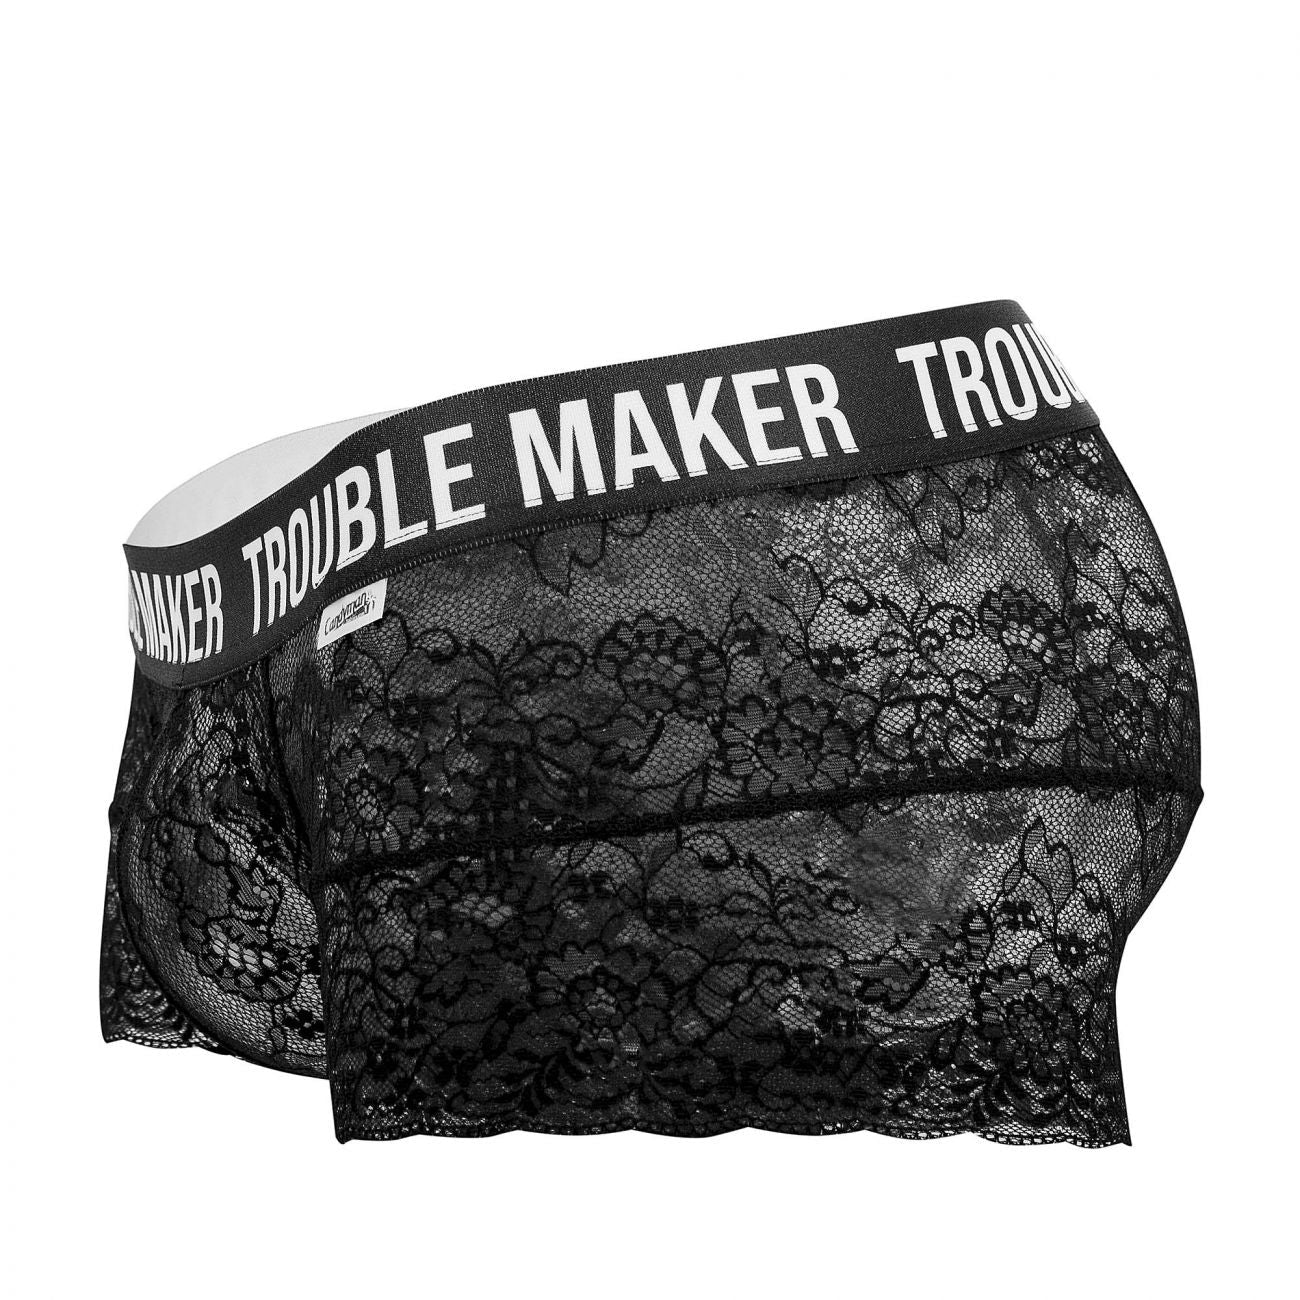 CandyMan 99616X Trouble Maker Lace Trunks Black Plus Sizes